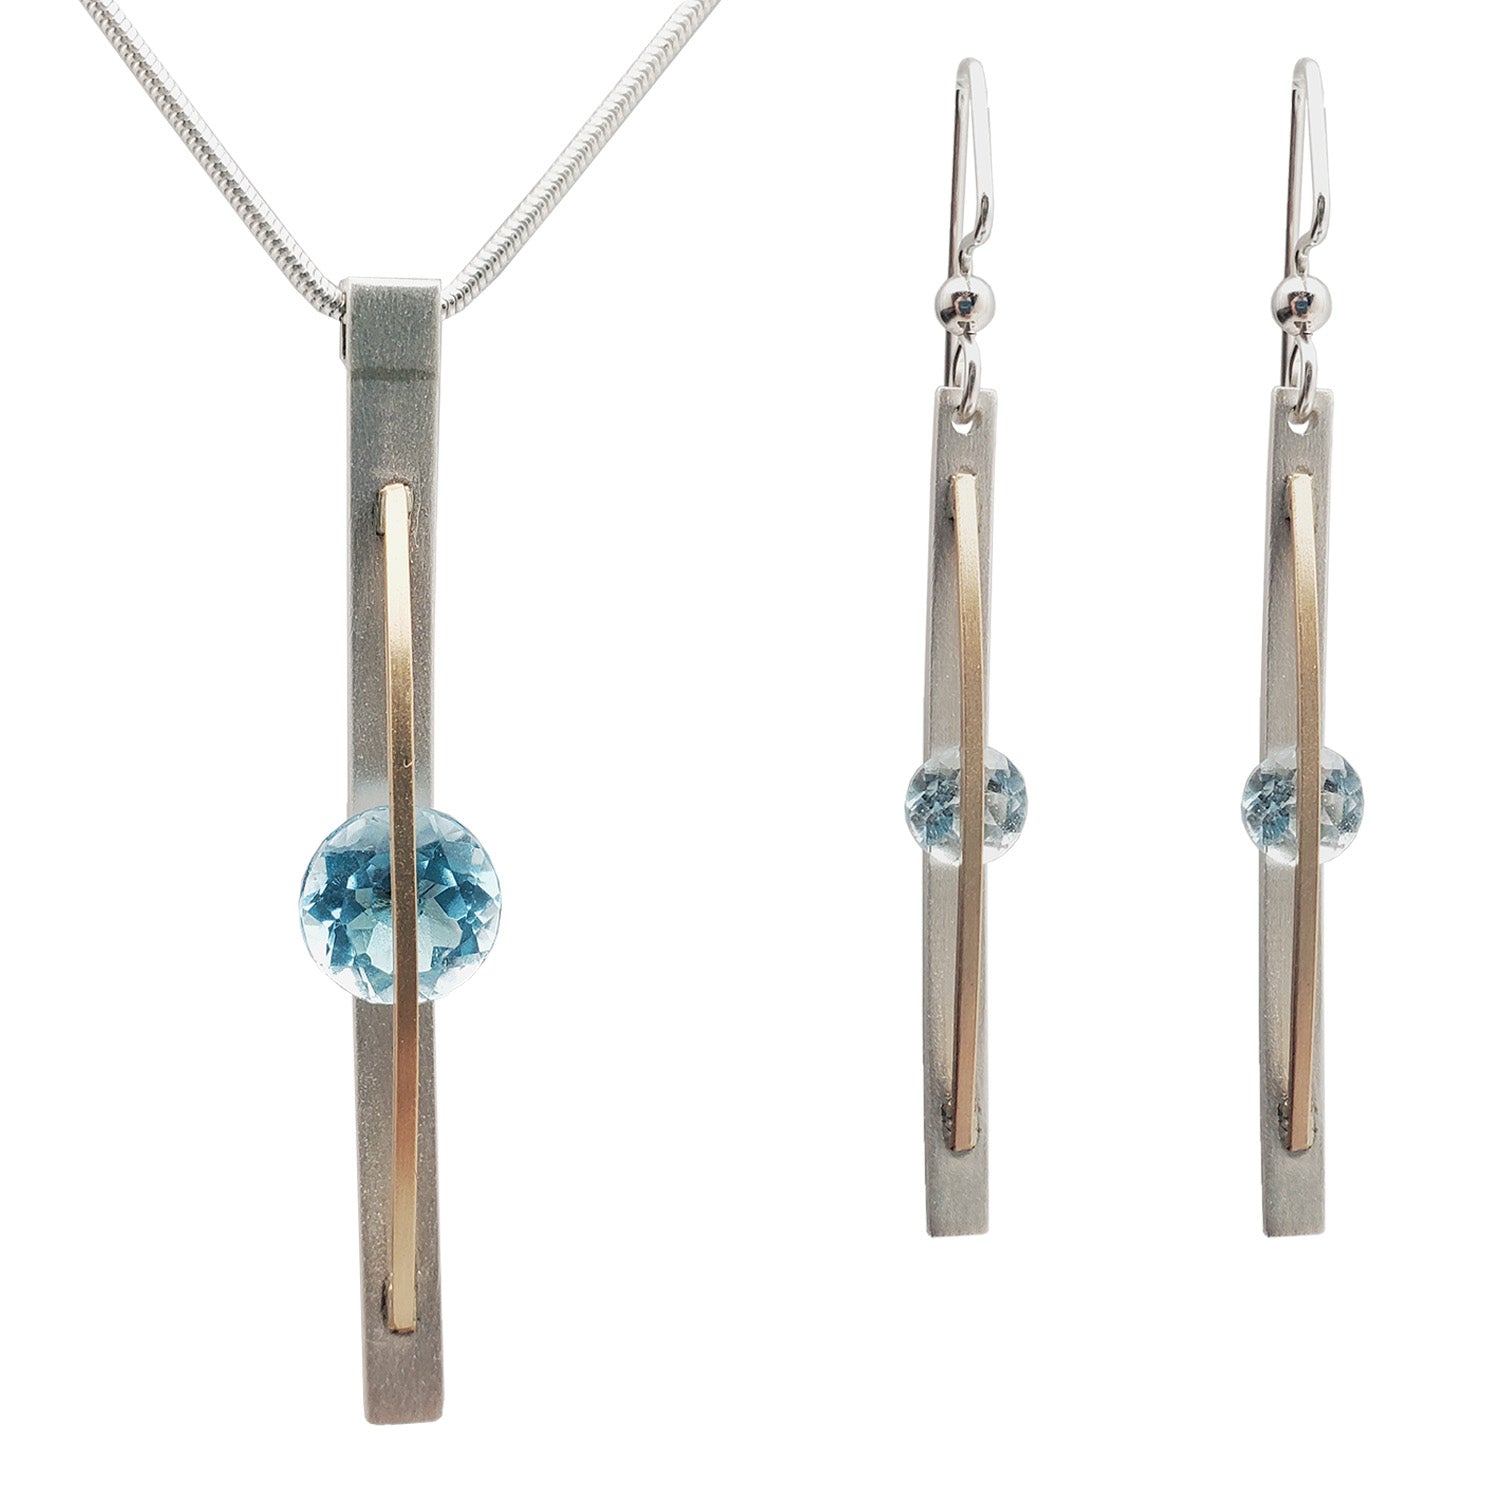 Blue Topaz Necklace or Earrings